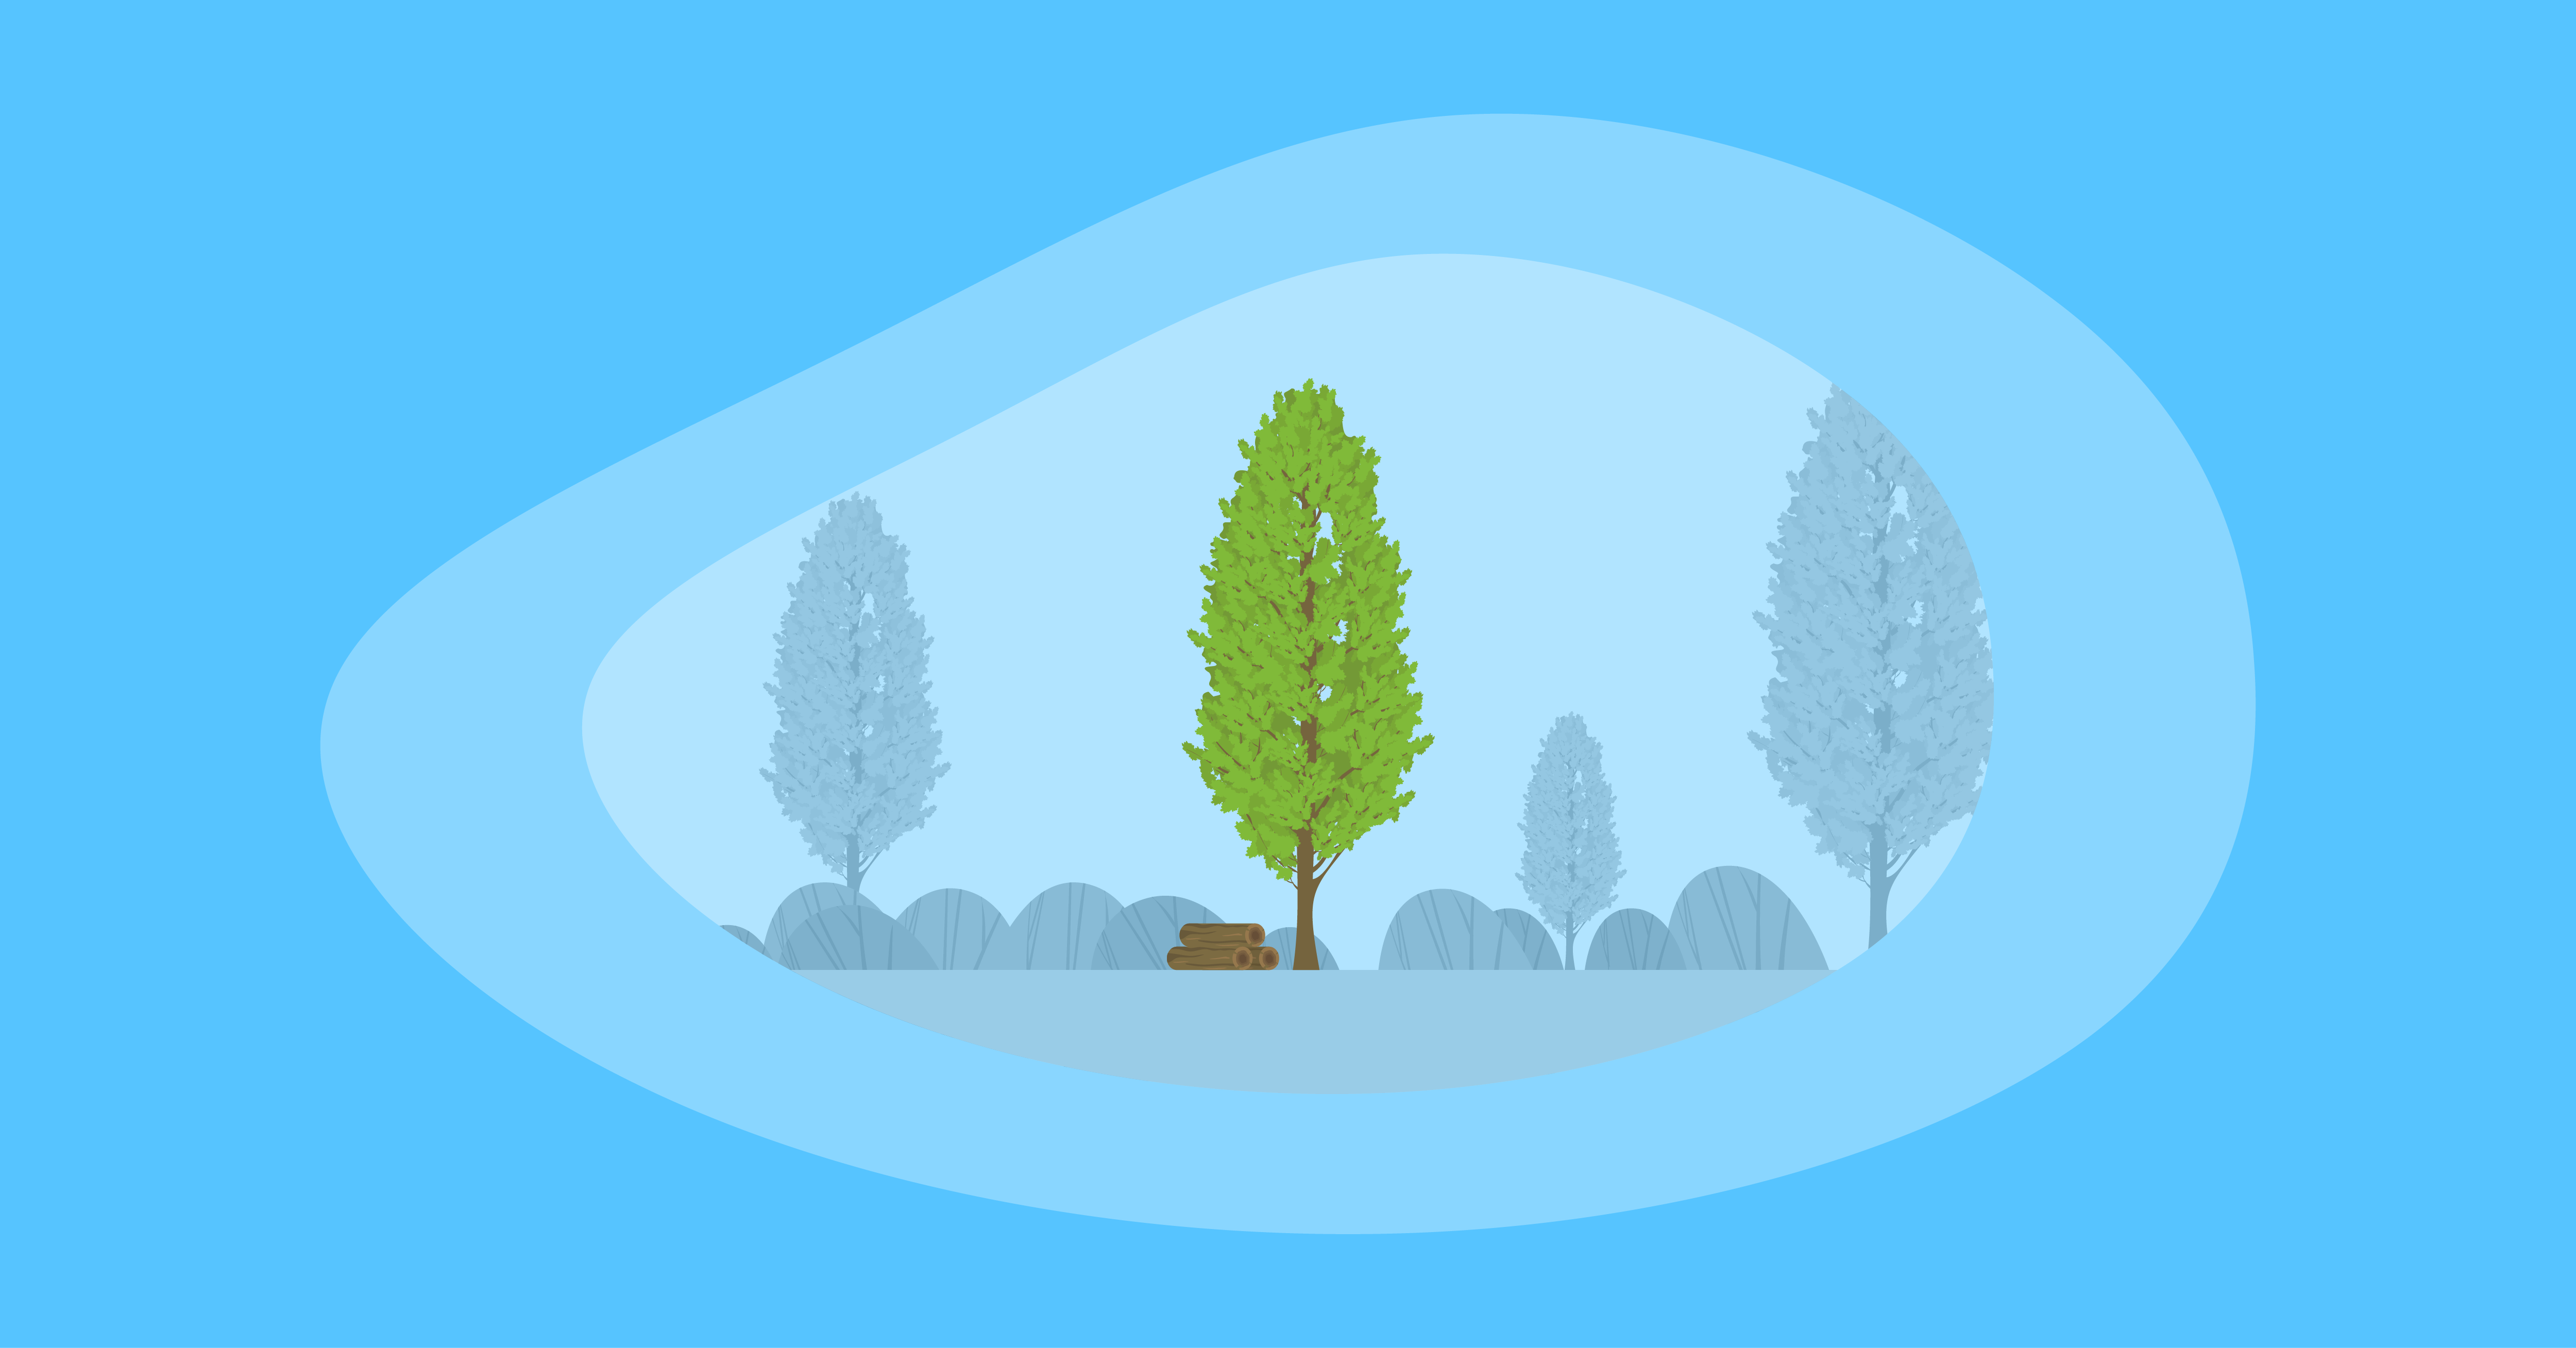 Illustration of a poplar tree and wood